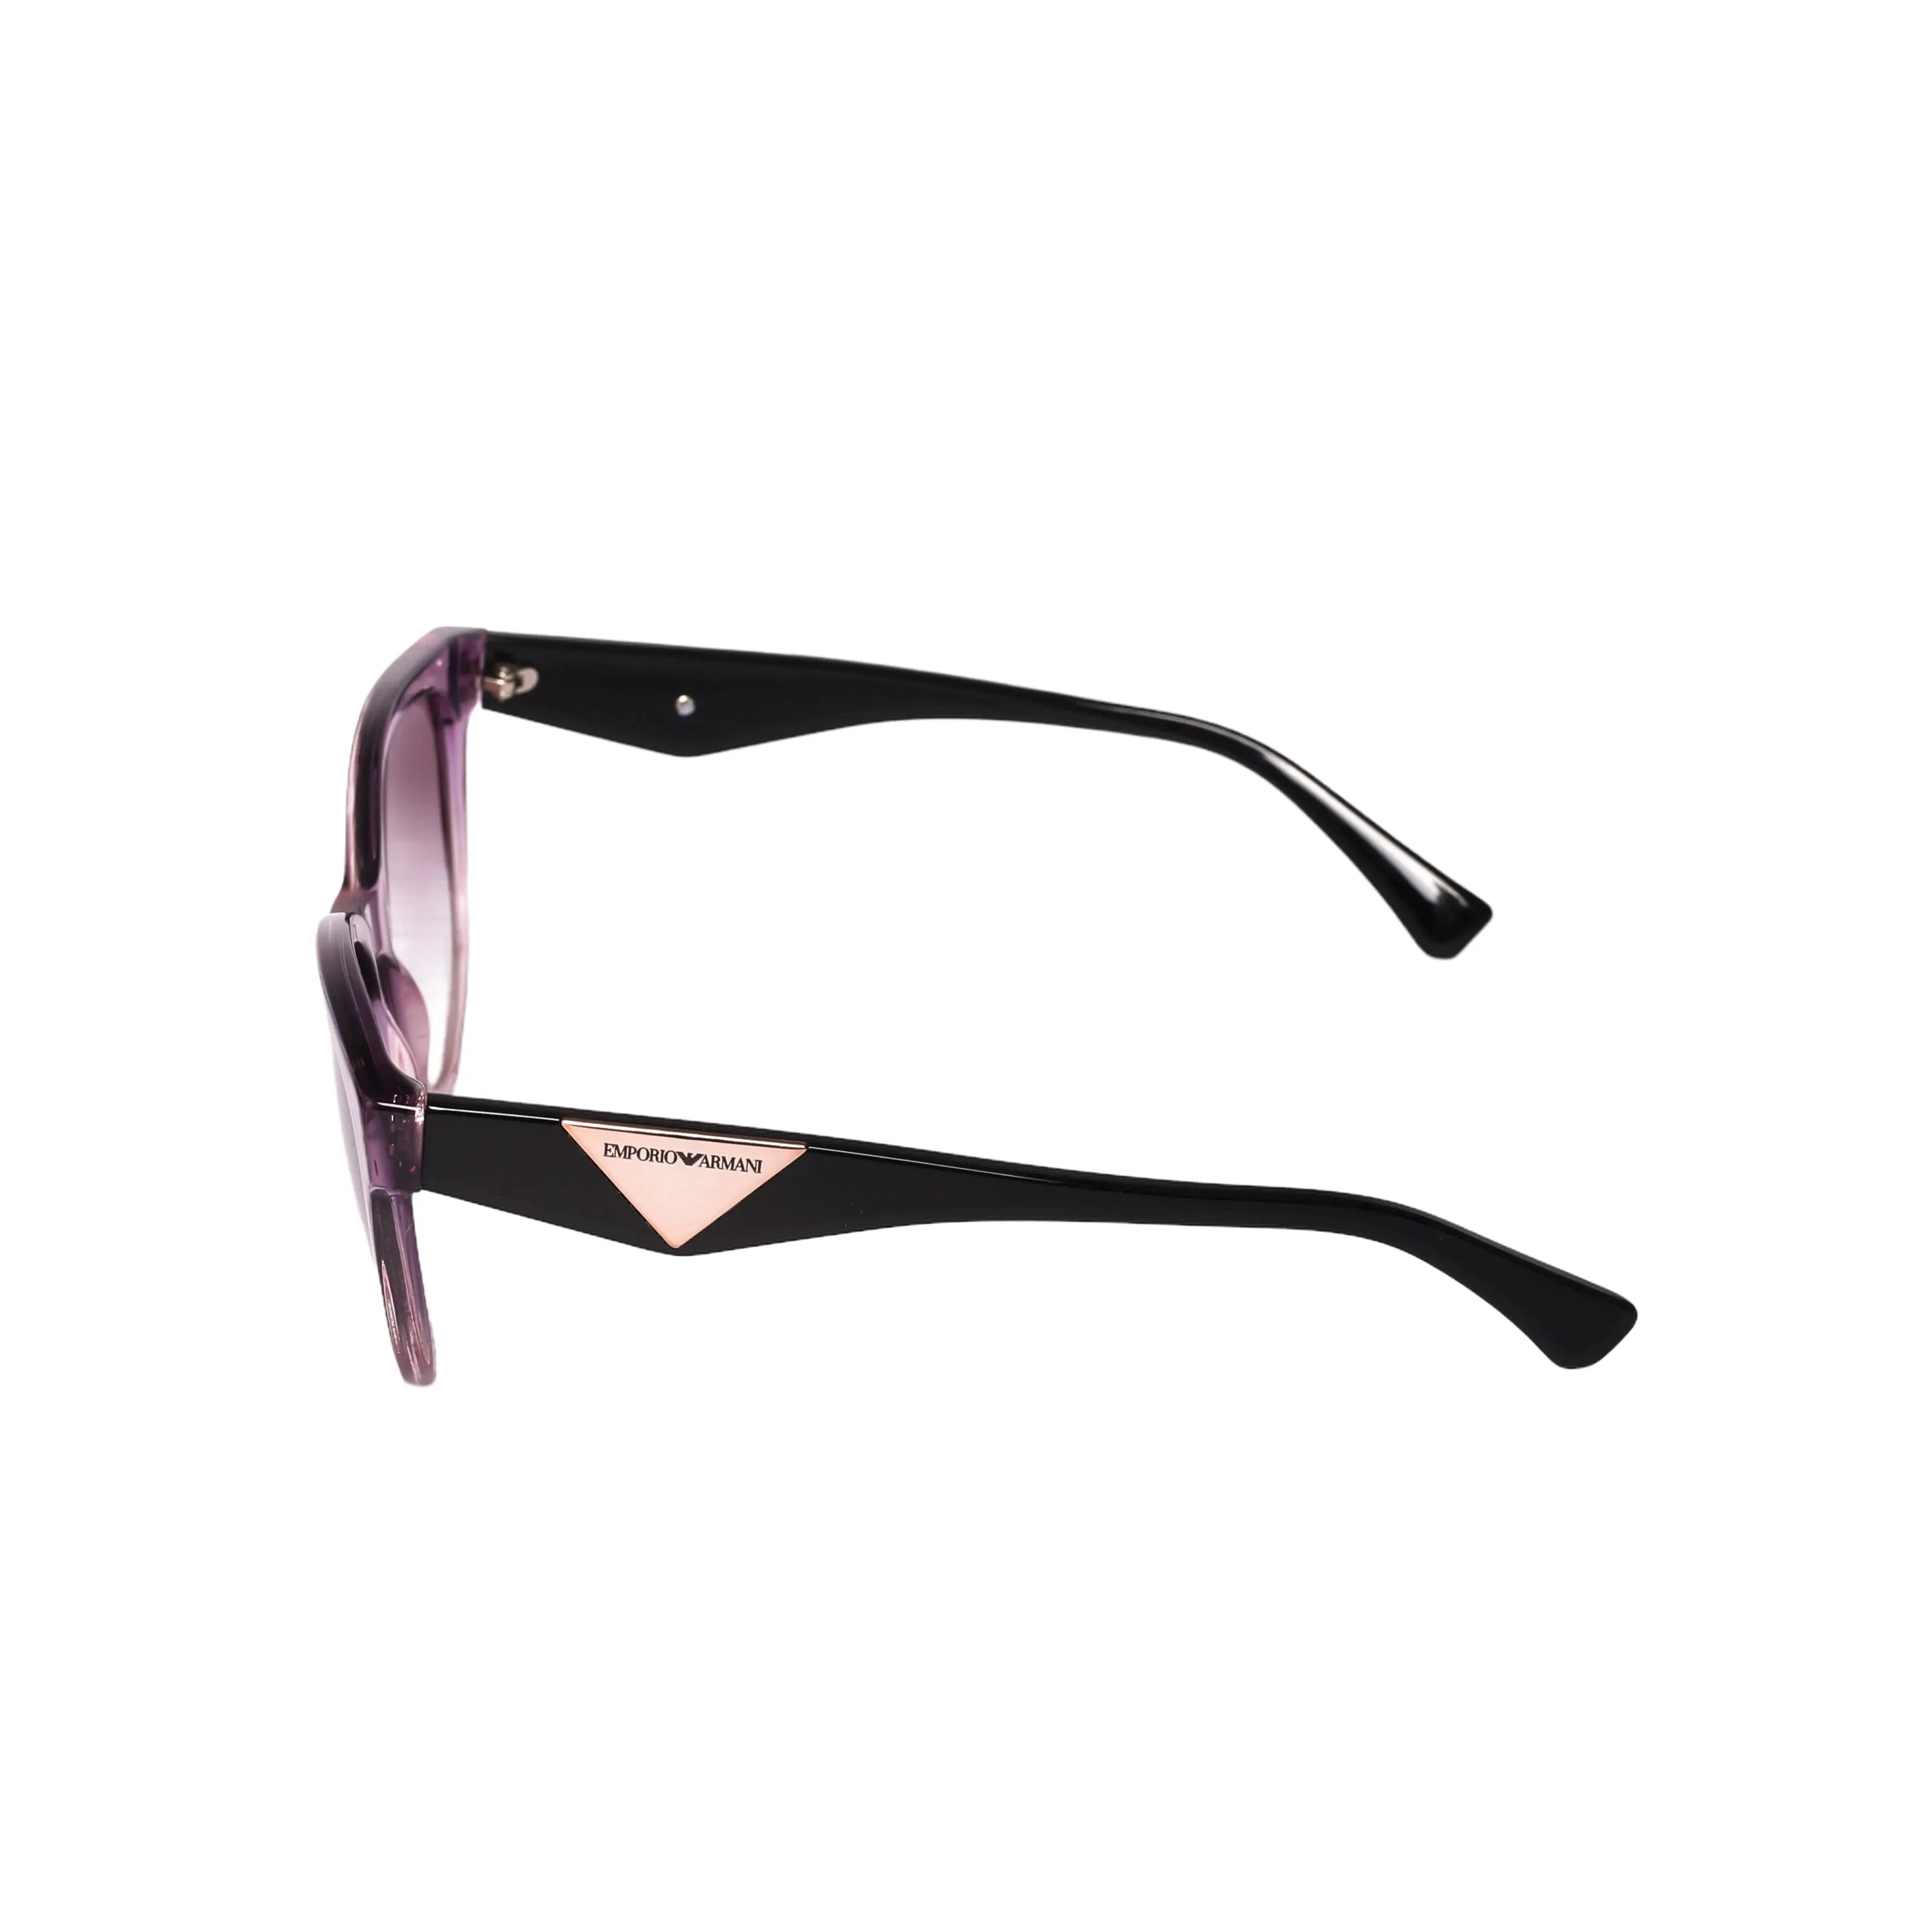 Emporio Armani-EA 4140-55-5966 Sunglasses - Premium Sunglasses from Emporio Armani - Just Rs. 12790! Shop now at Laxmi Opticians